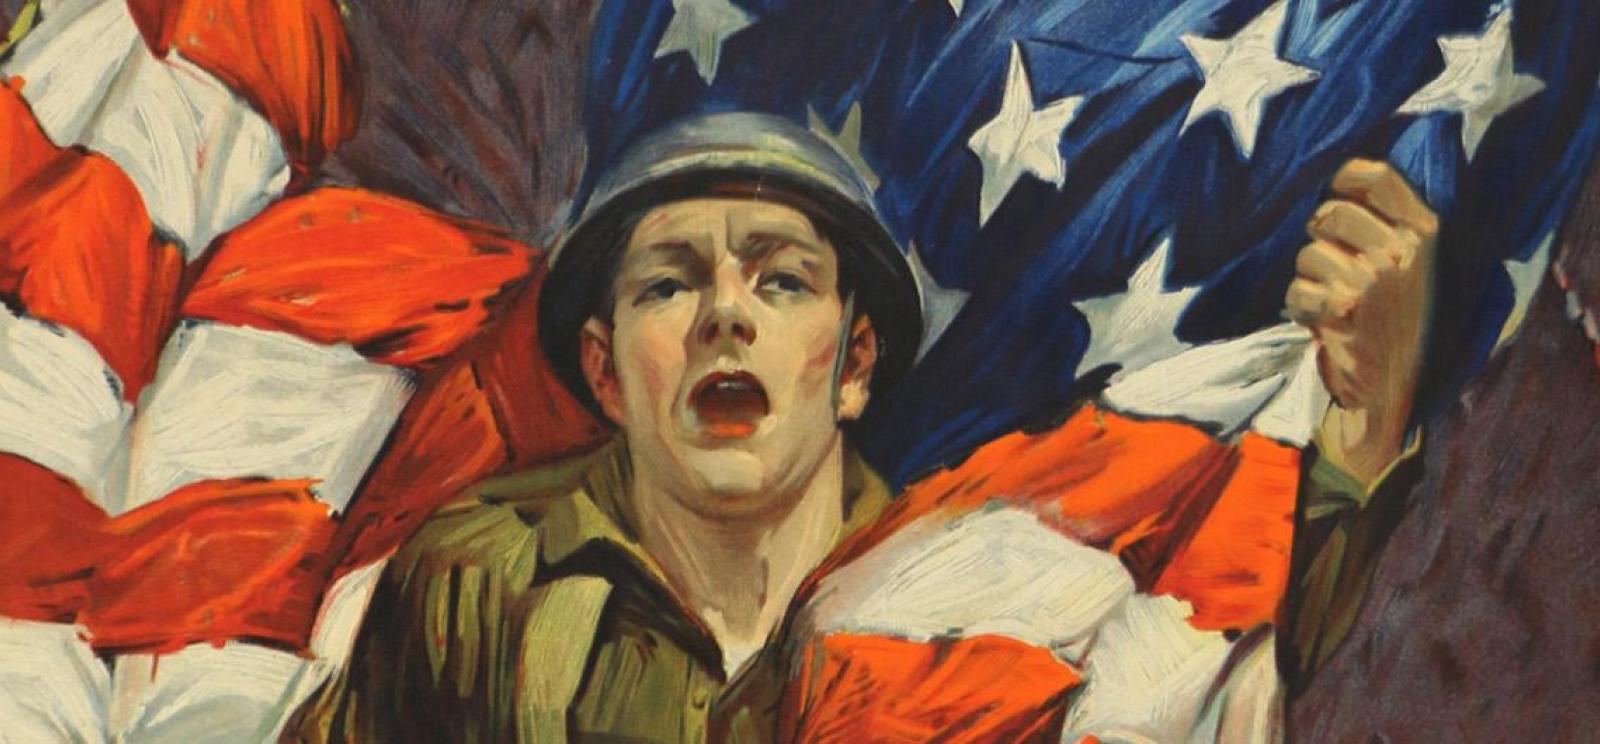 U.S. Enters the War Propaganda Poster